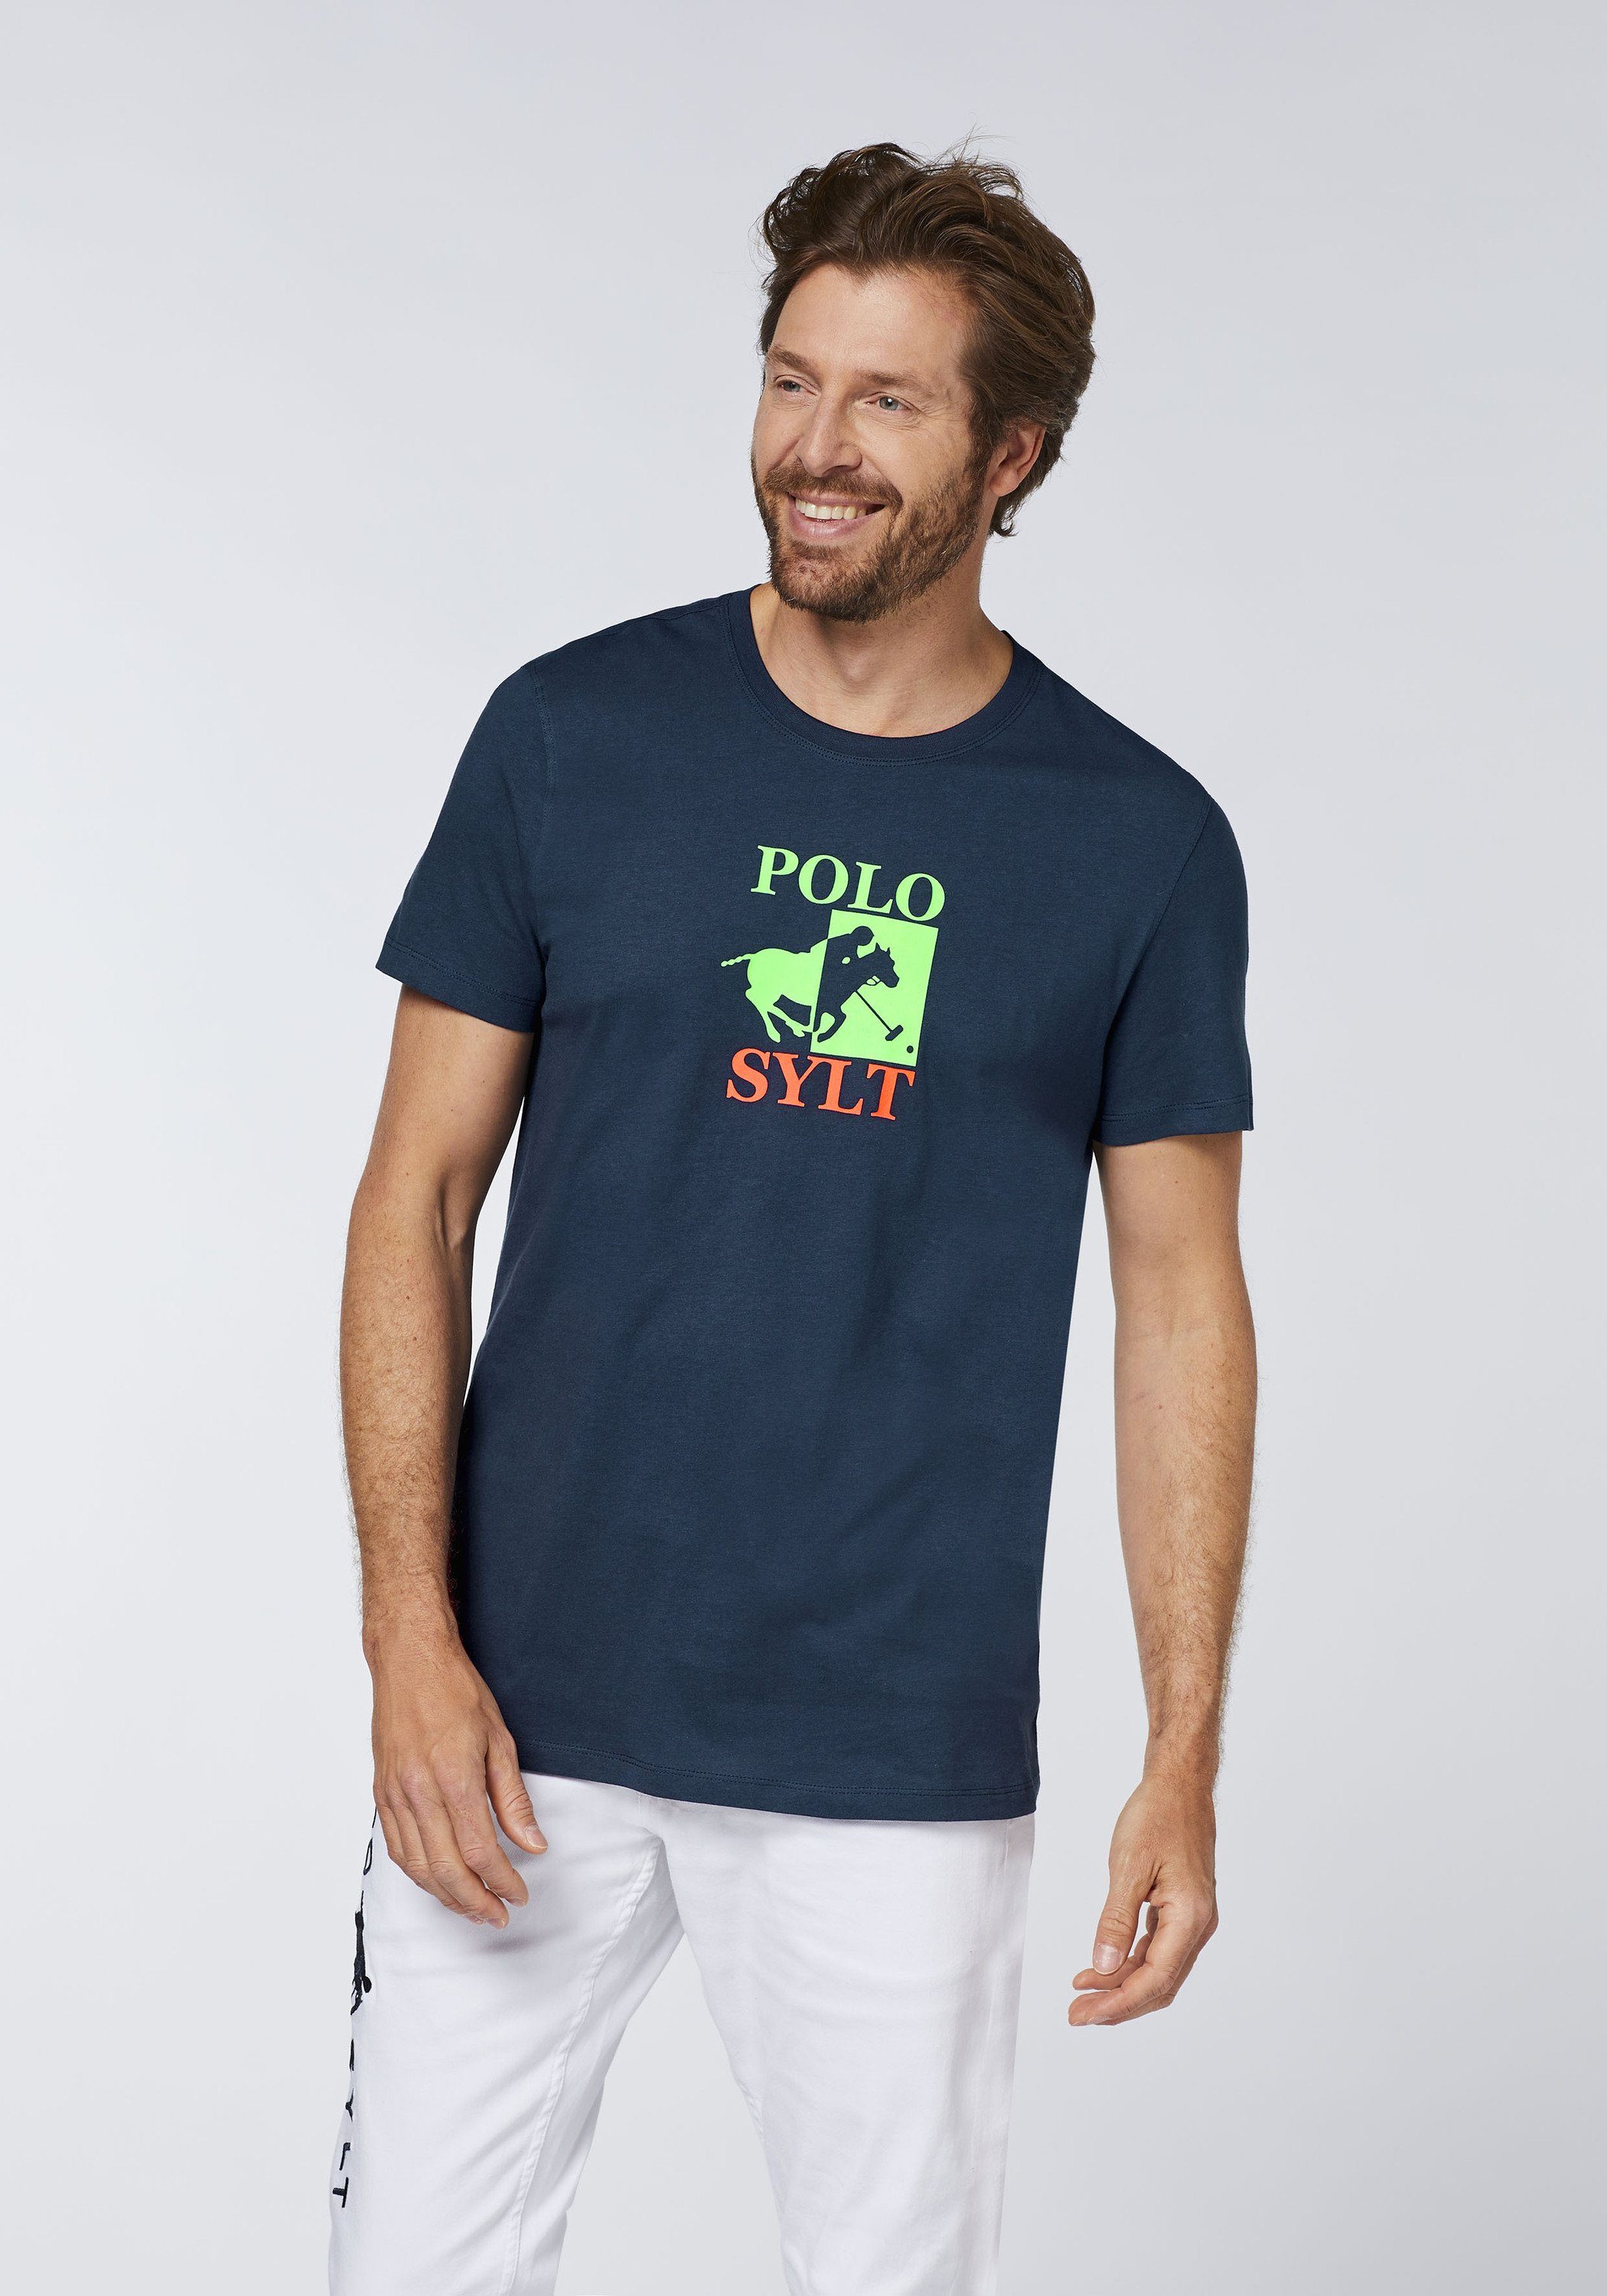 Total Sylt Polo großem 19-4010 Eclipse Logoprint mit Print-Shirt